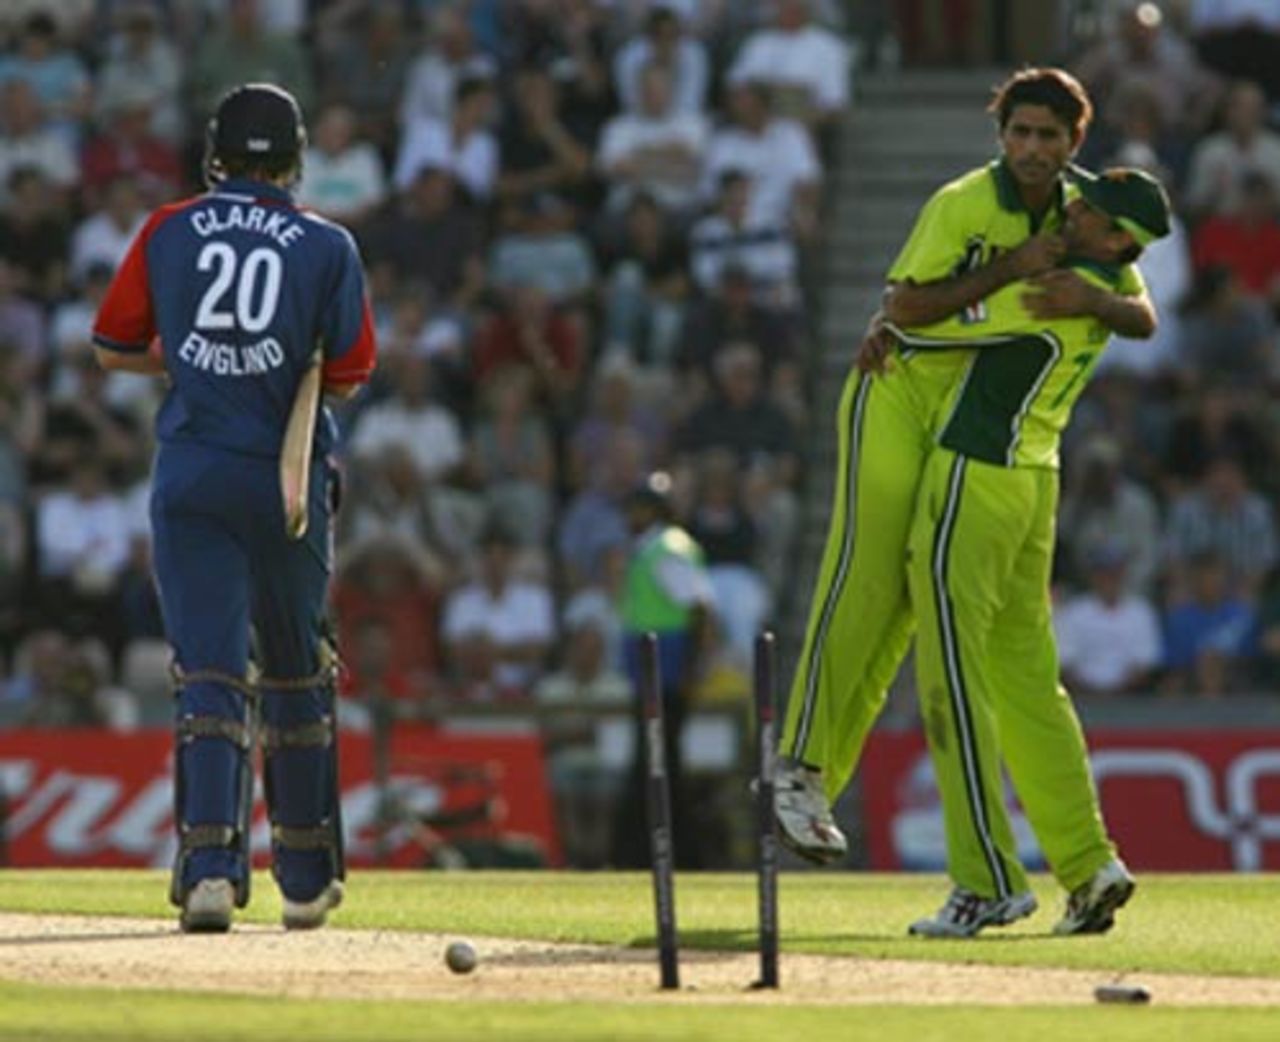 Abdul Razzaq celebrates bowling Rikki Clarke first ball, England v Pakistan, 3rd ODI, The Rose Bowl, September 5, 2006